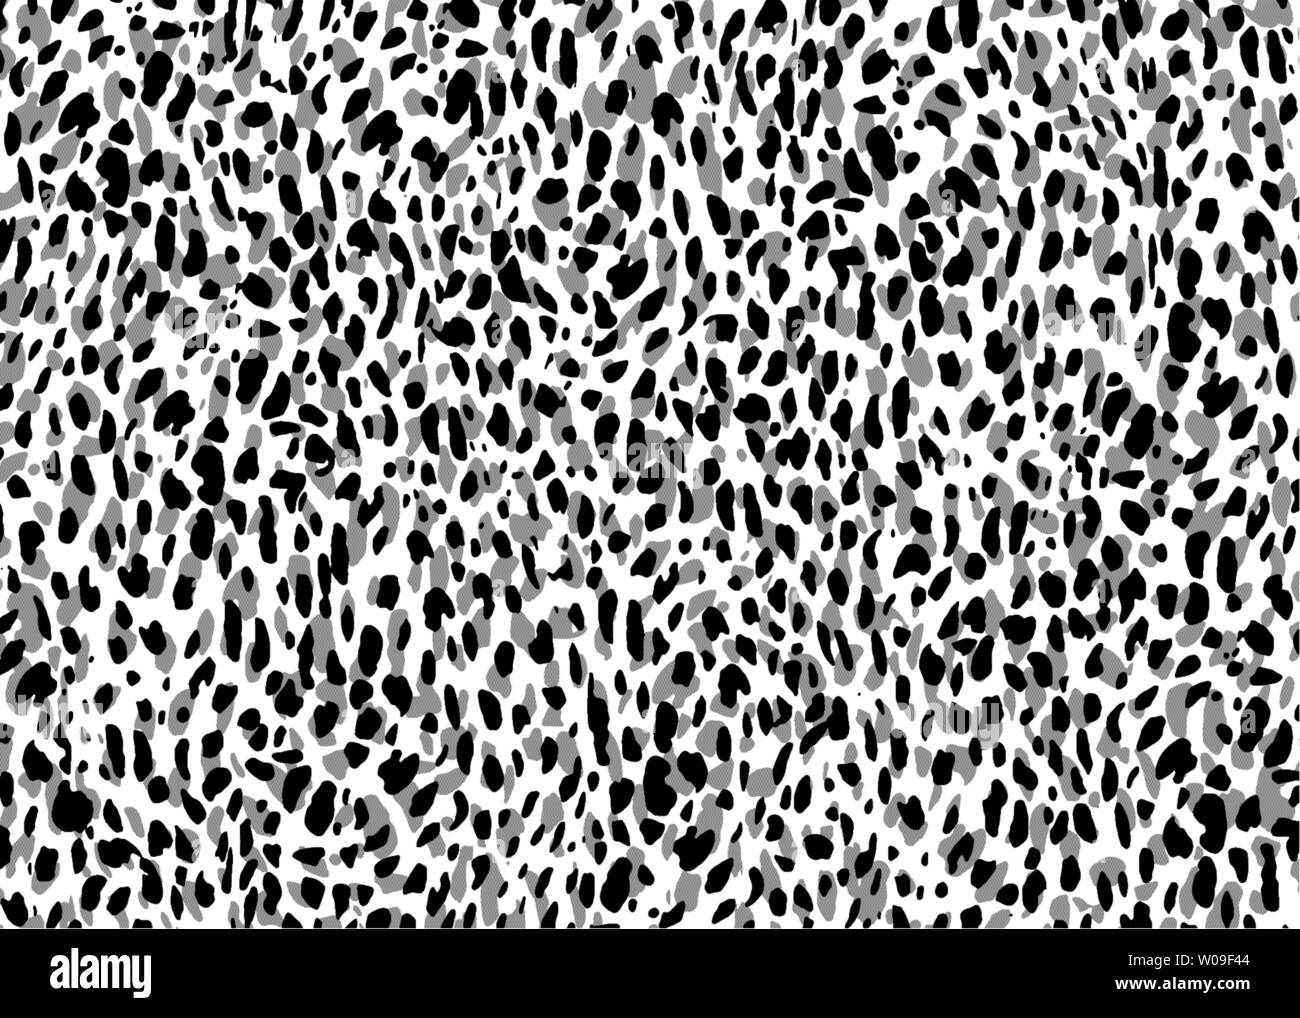 https://c8.alamy.com/comp/W09F44/leopard-pattern-design-vector-illustration-background-for-print-textile-web-home-decor-fashion-surface-graphic-design-W09F44.jpg